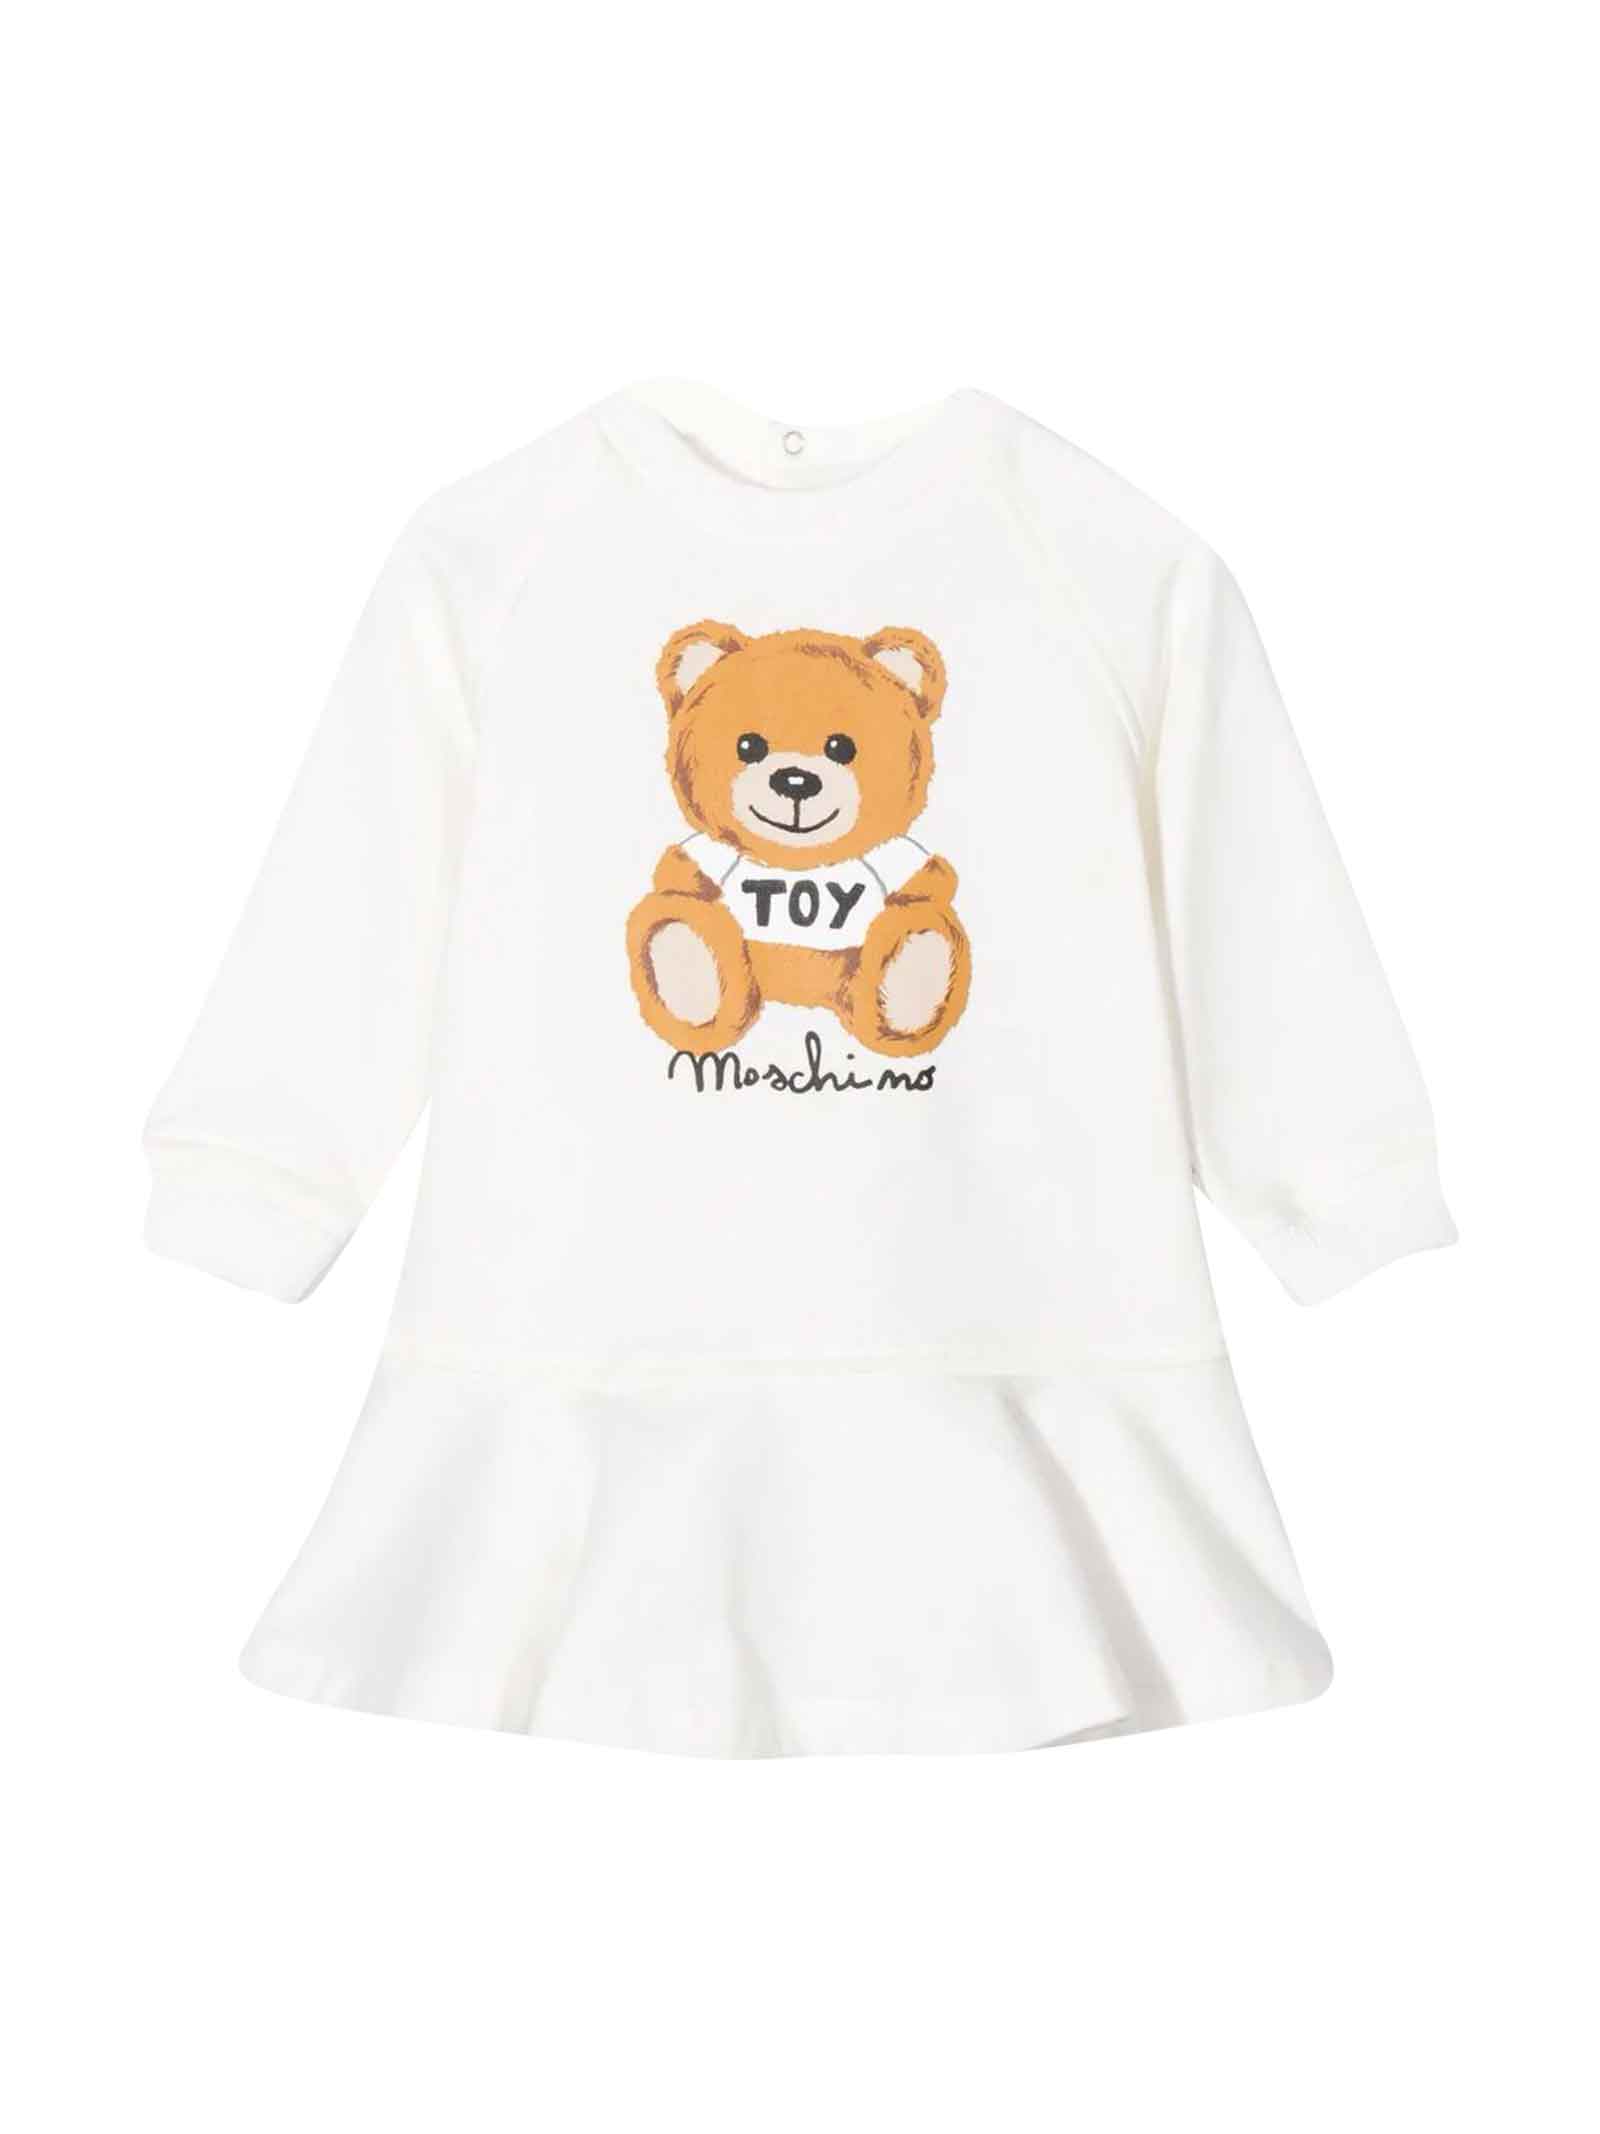 MOSCHINO BABY GIRL DRESS WITH TEDDY BEAR PRINT